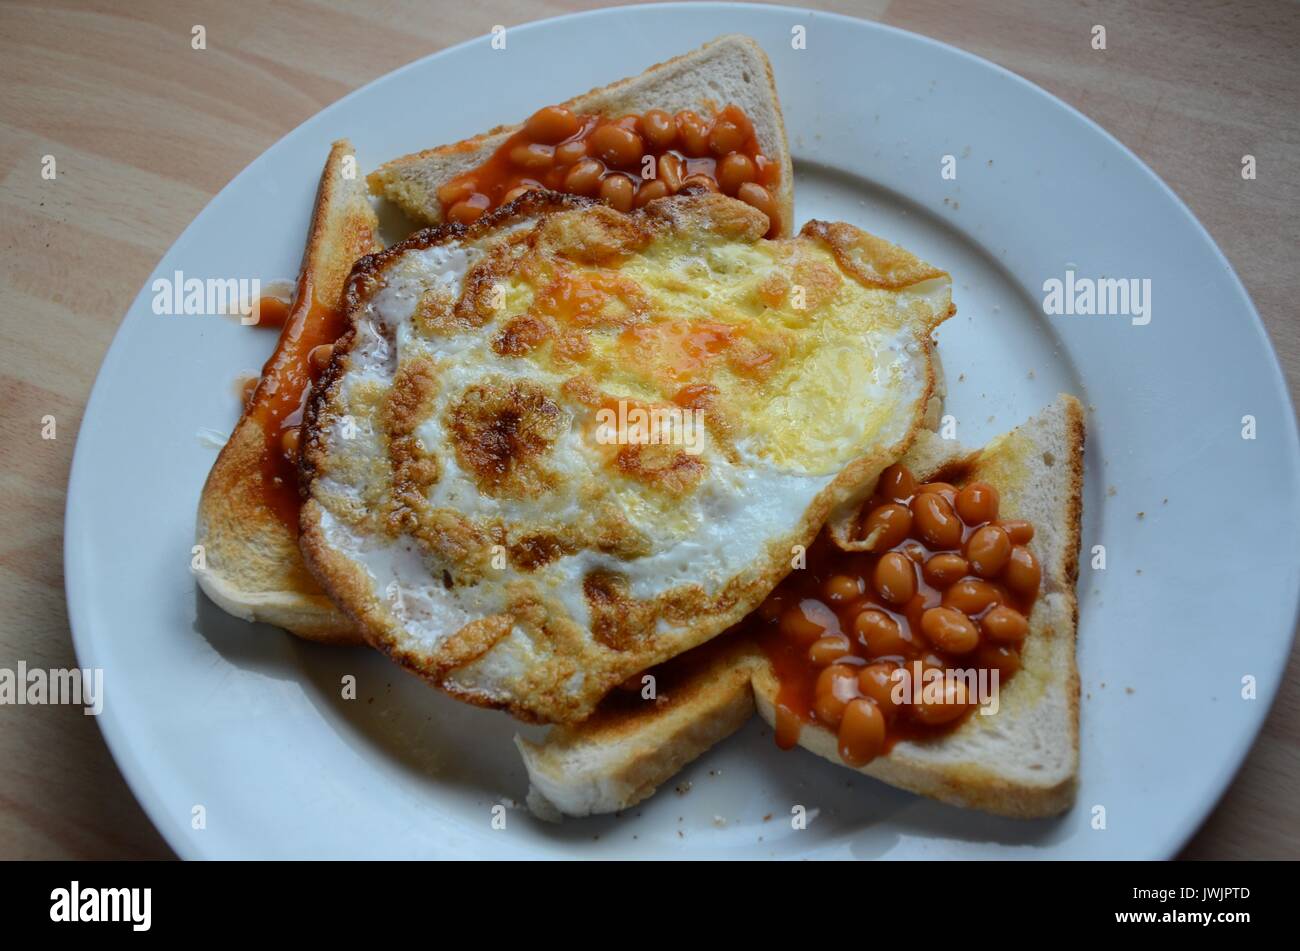 egg, beans on toast Stock Photo